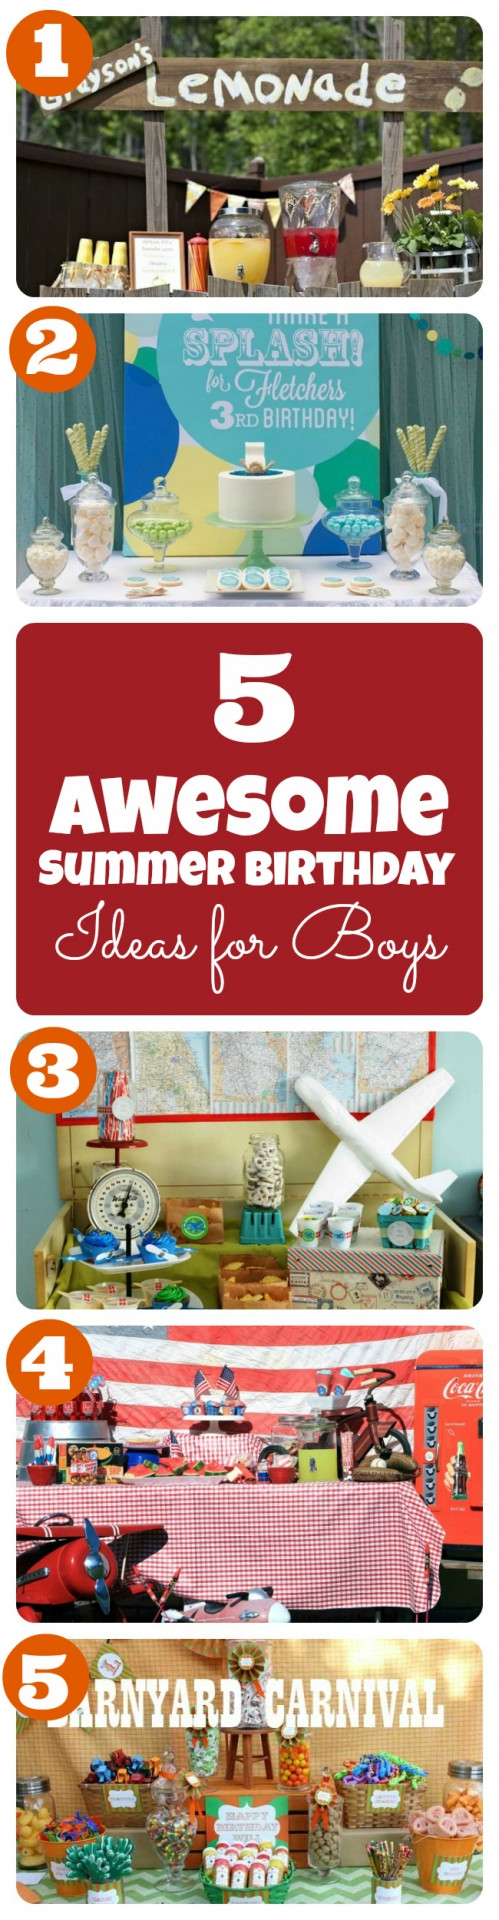 Boy Summer Birthday Party Ideas
 Summer Birthday Party Theme Ideas for Boys